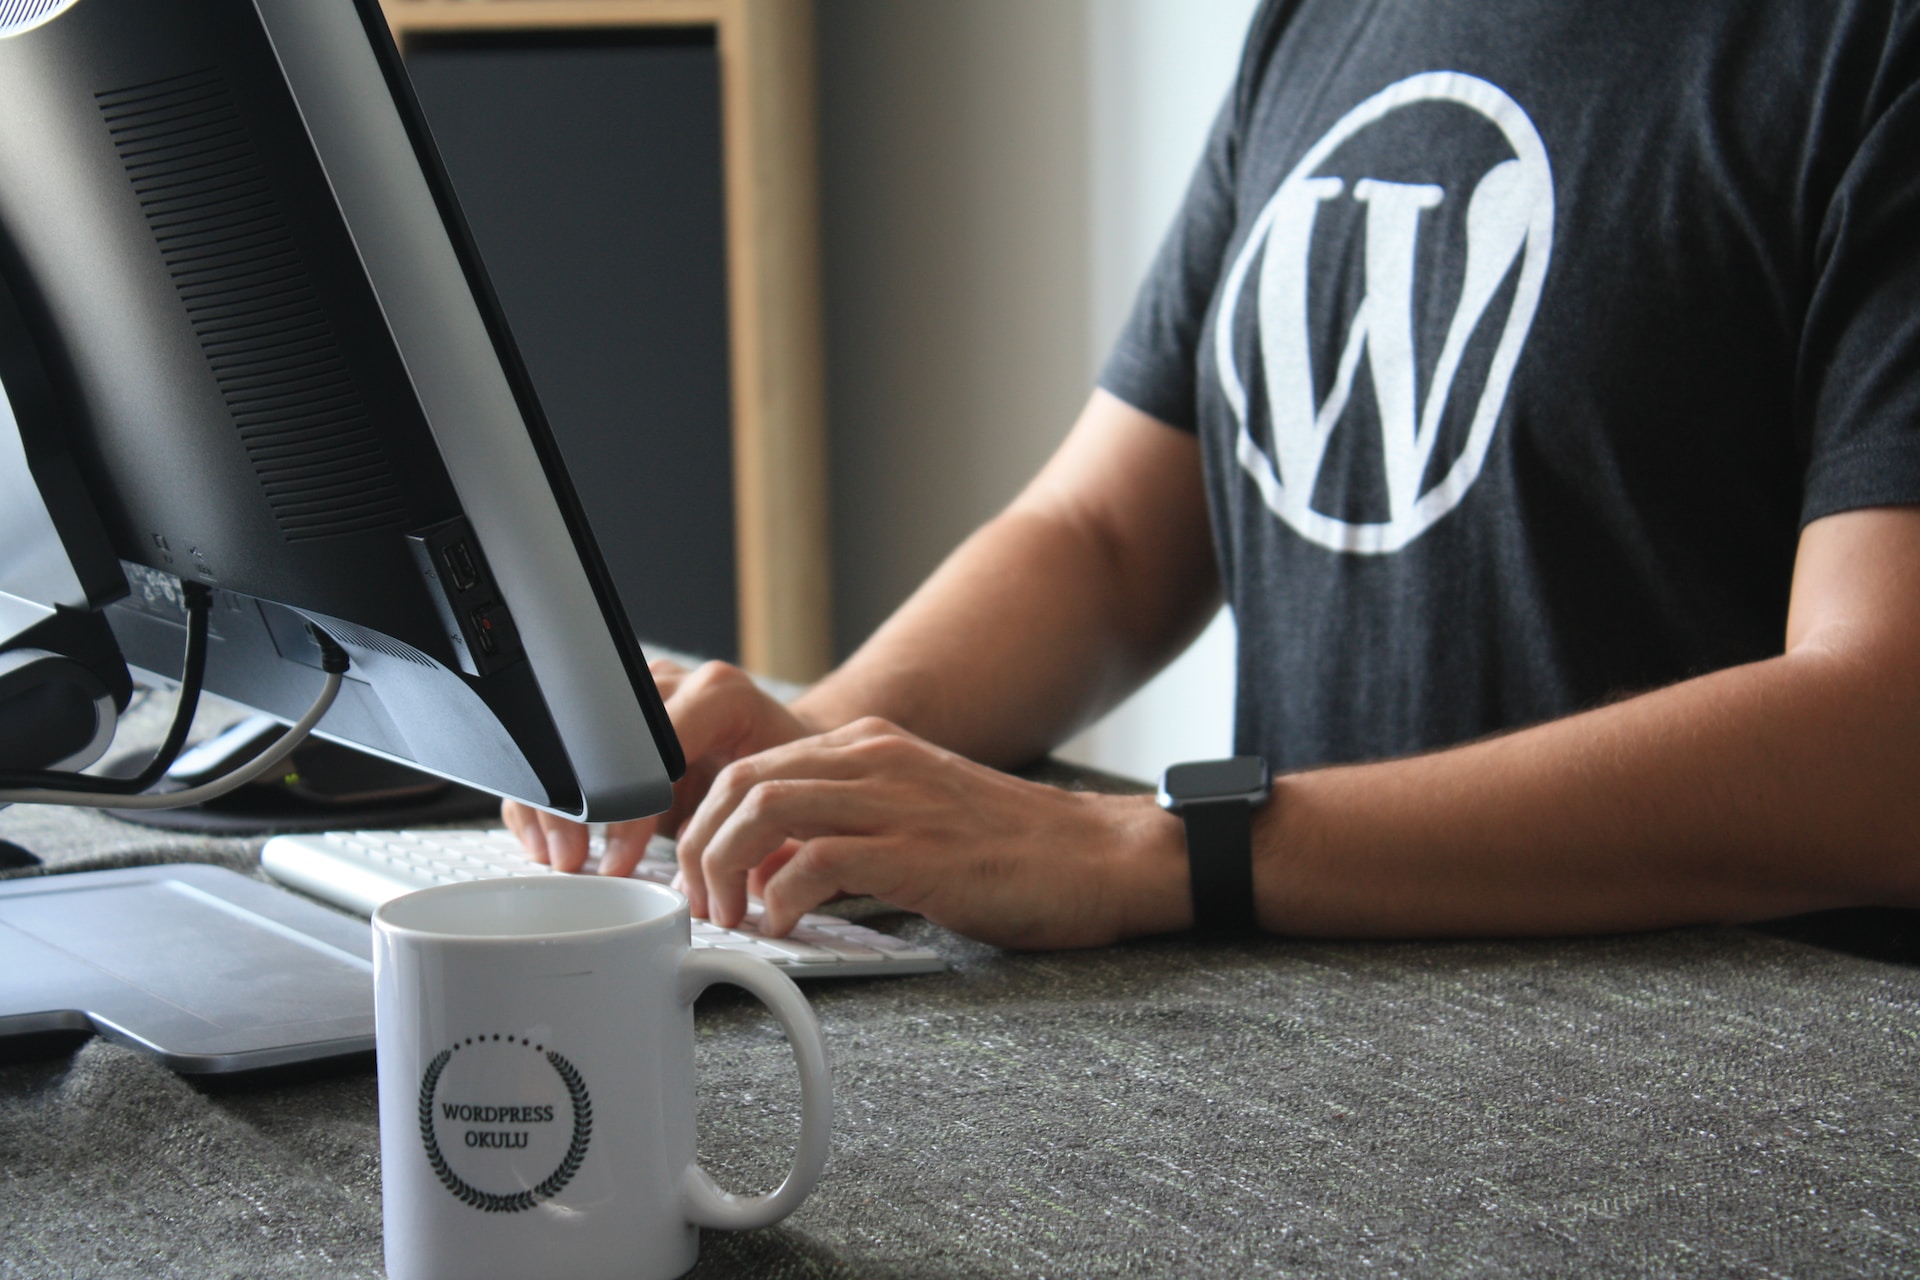 Programmer wearing a t-shirt with WordPress logo